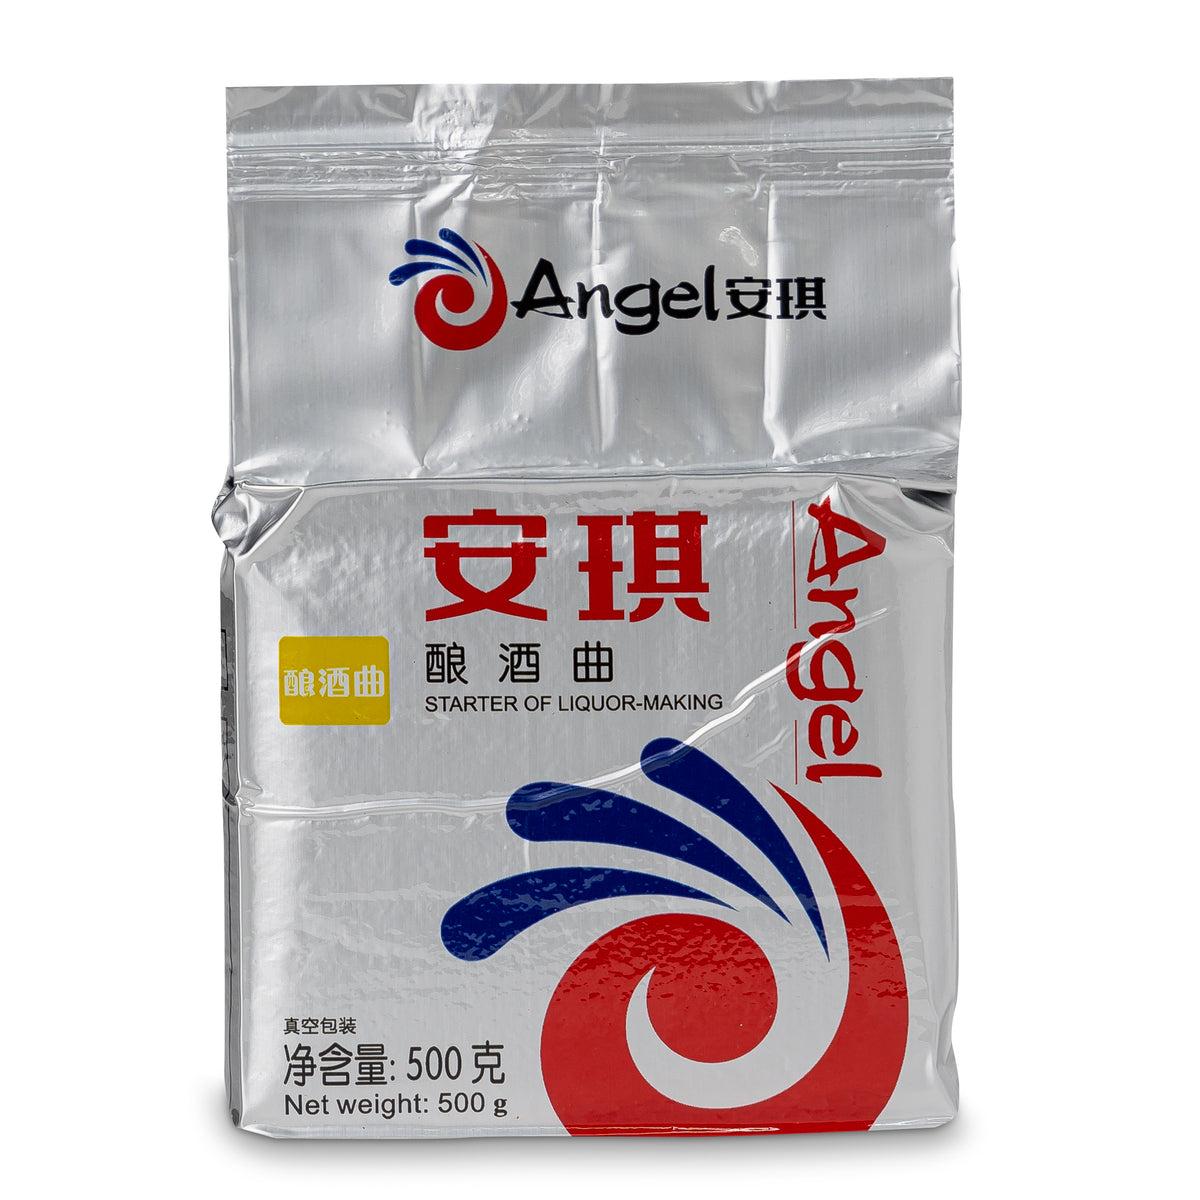 Angel Yellow Label Leaven Yeast